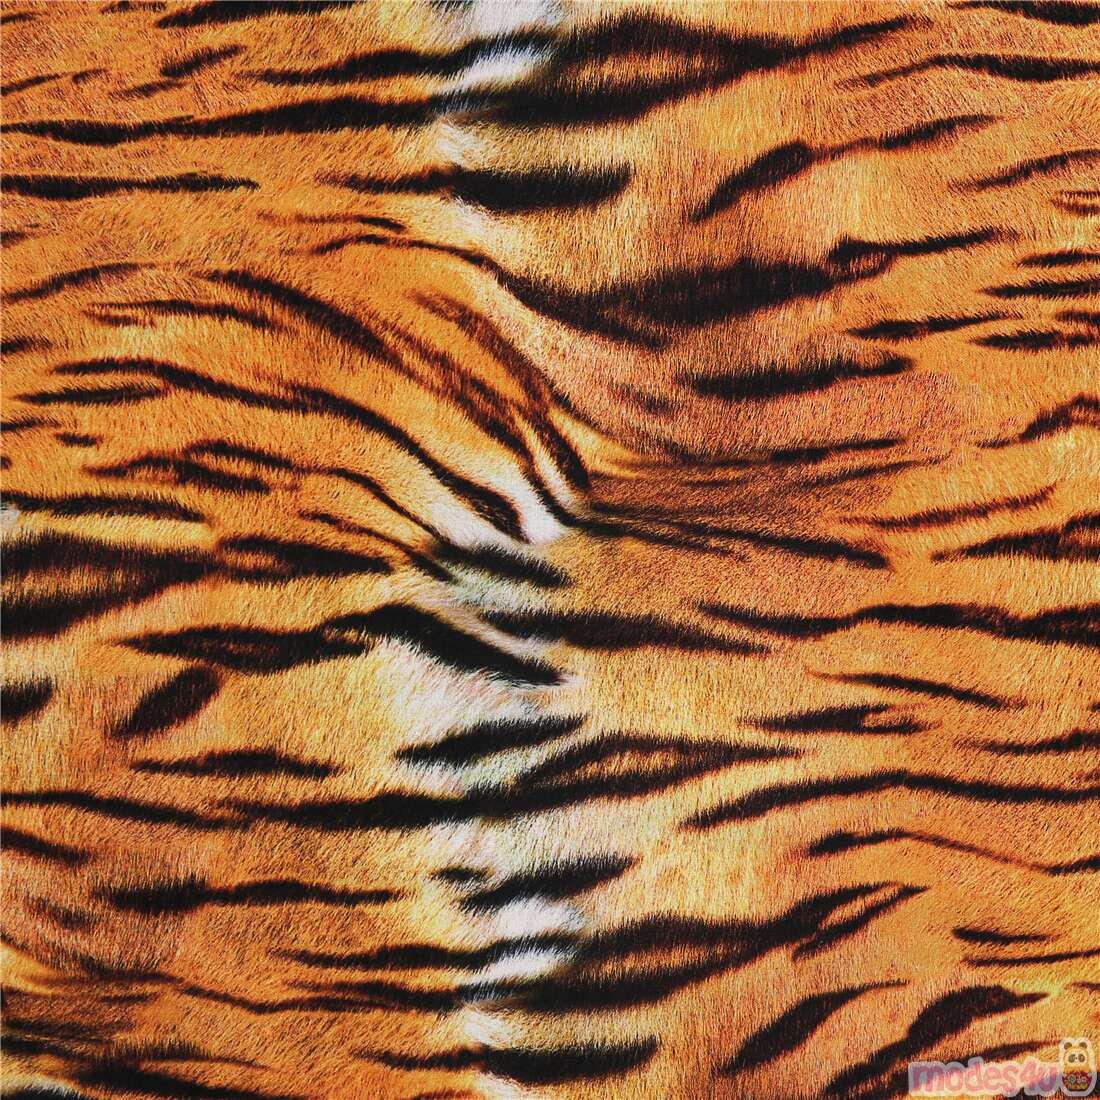 Tiger animal print black stripe orange fabric Robert Kaufman - modeS4u